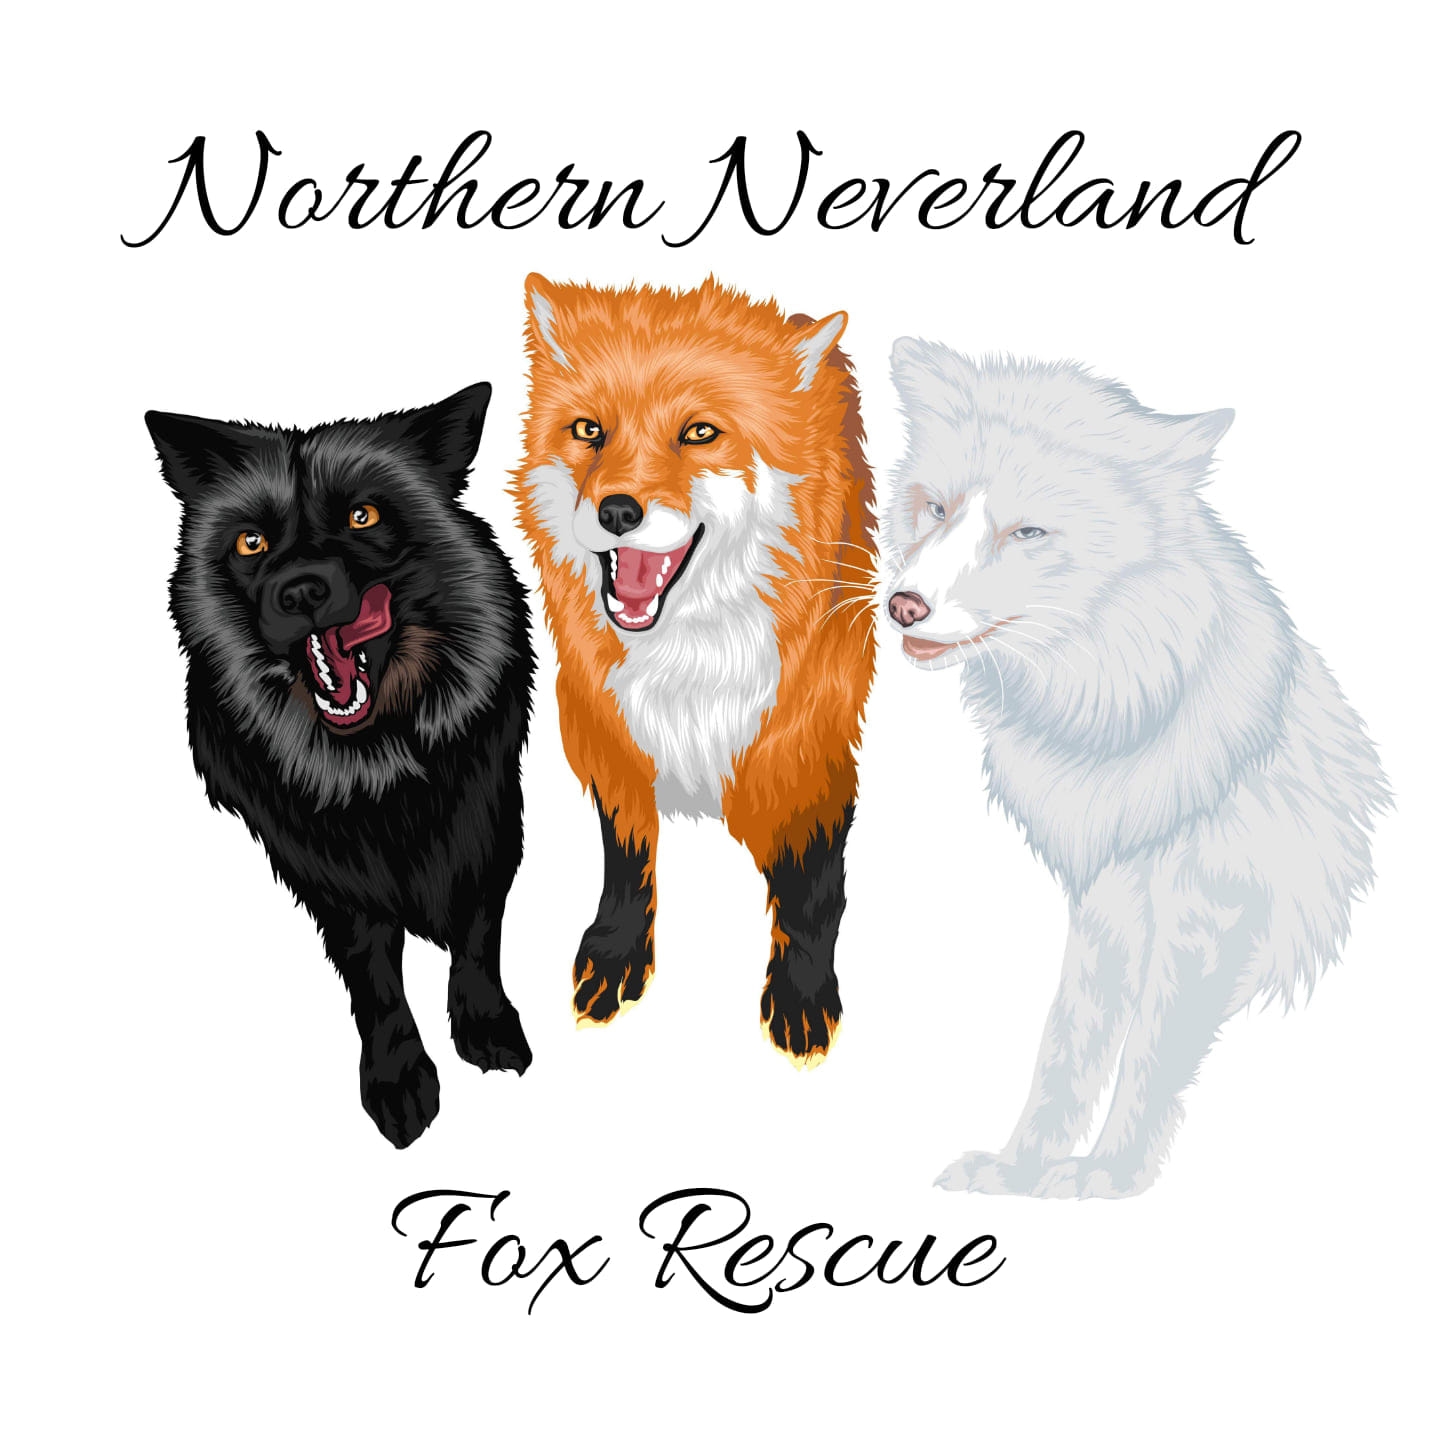 Northern Neverland Fox Rescue